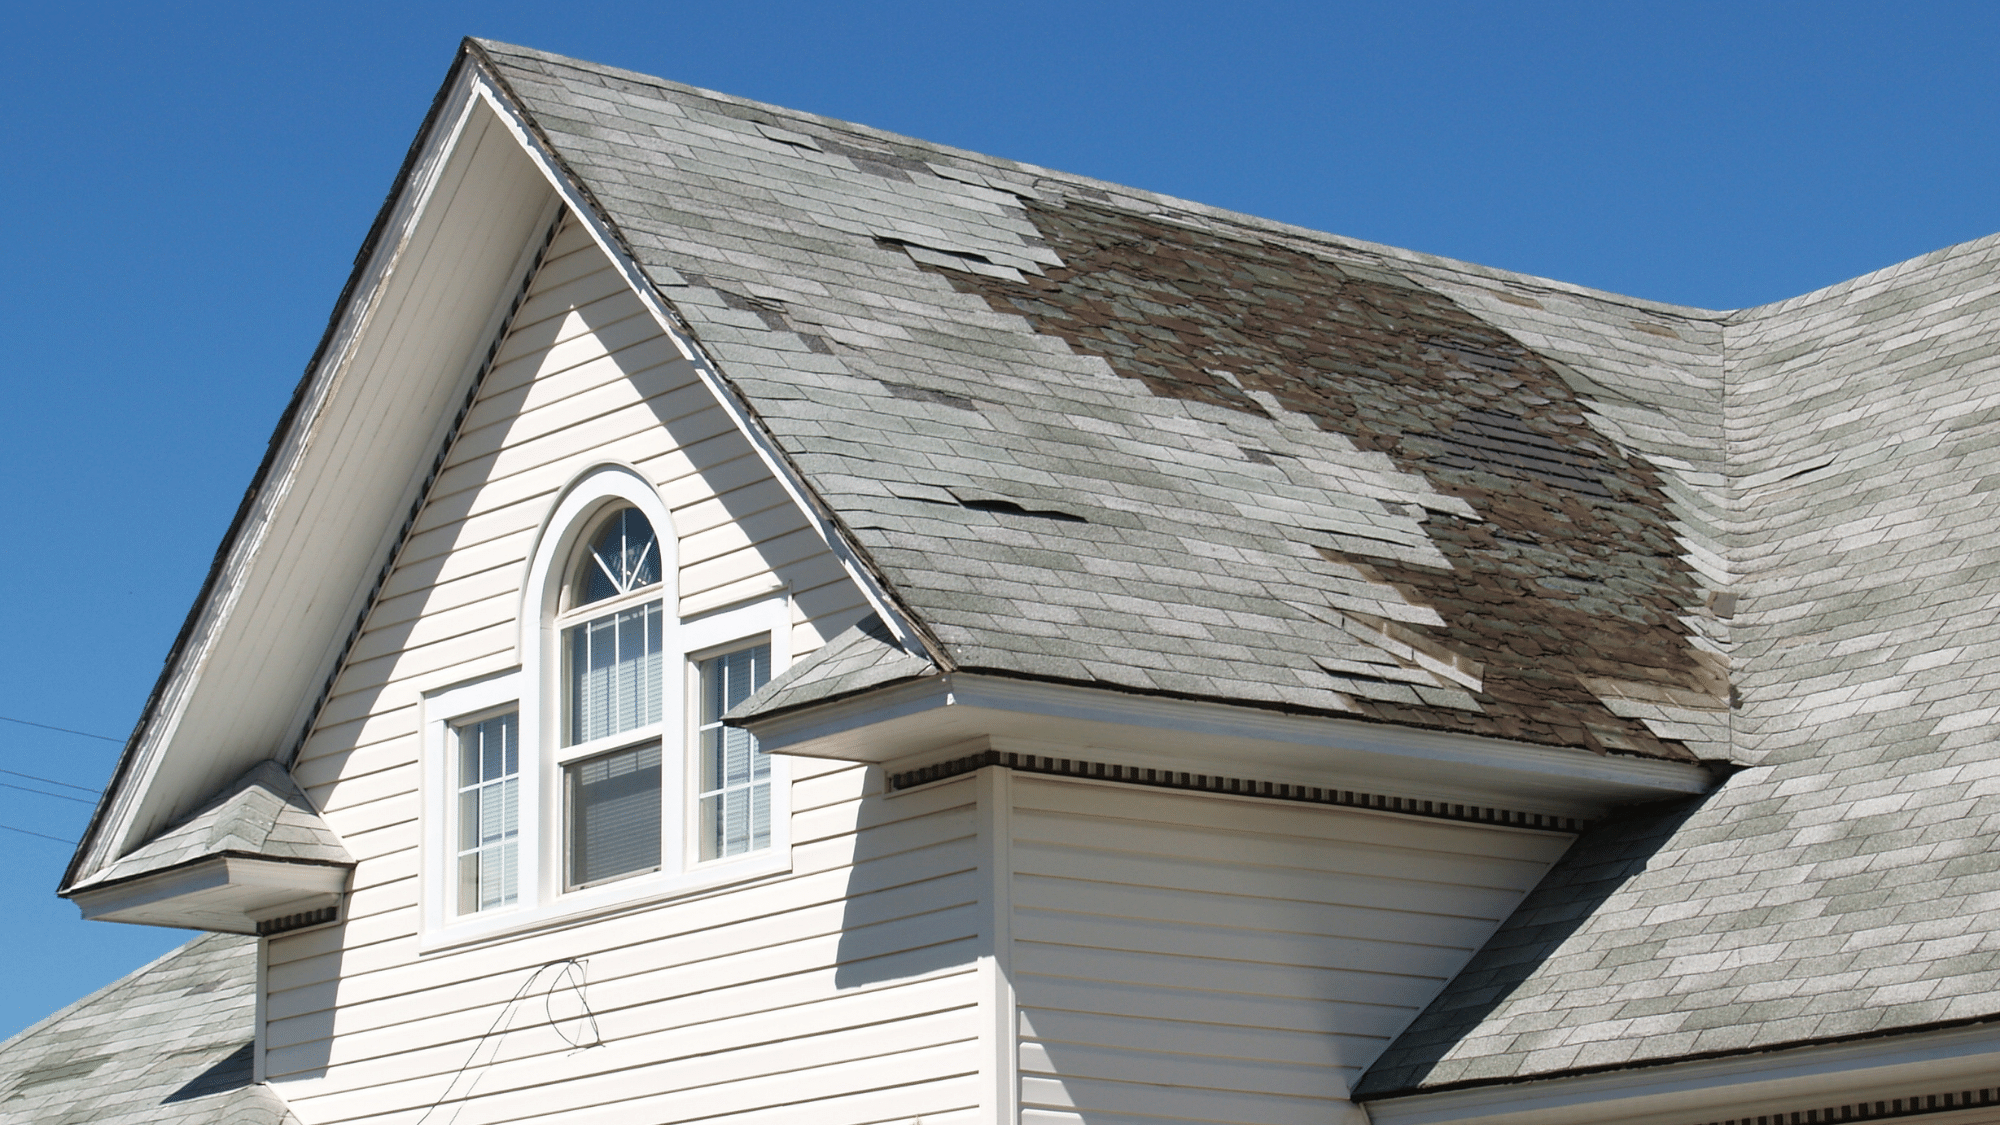 Strasburg Roof Damage - Insurance Claims